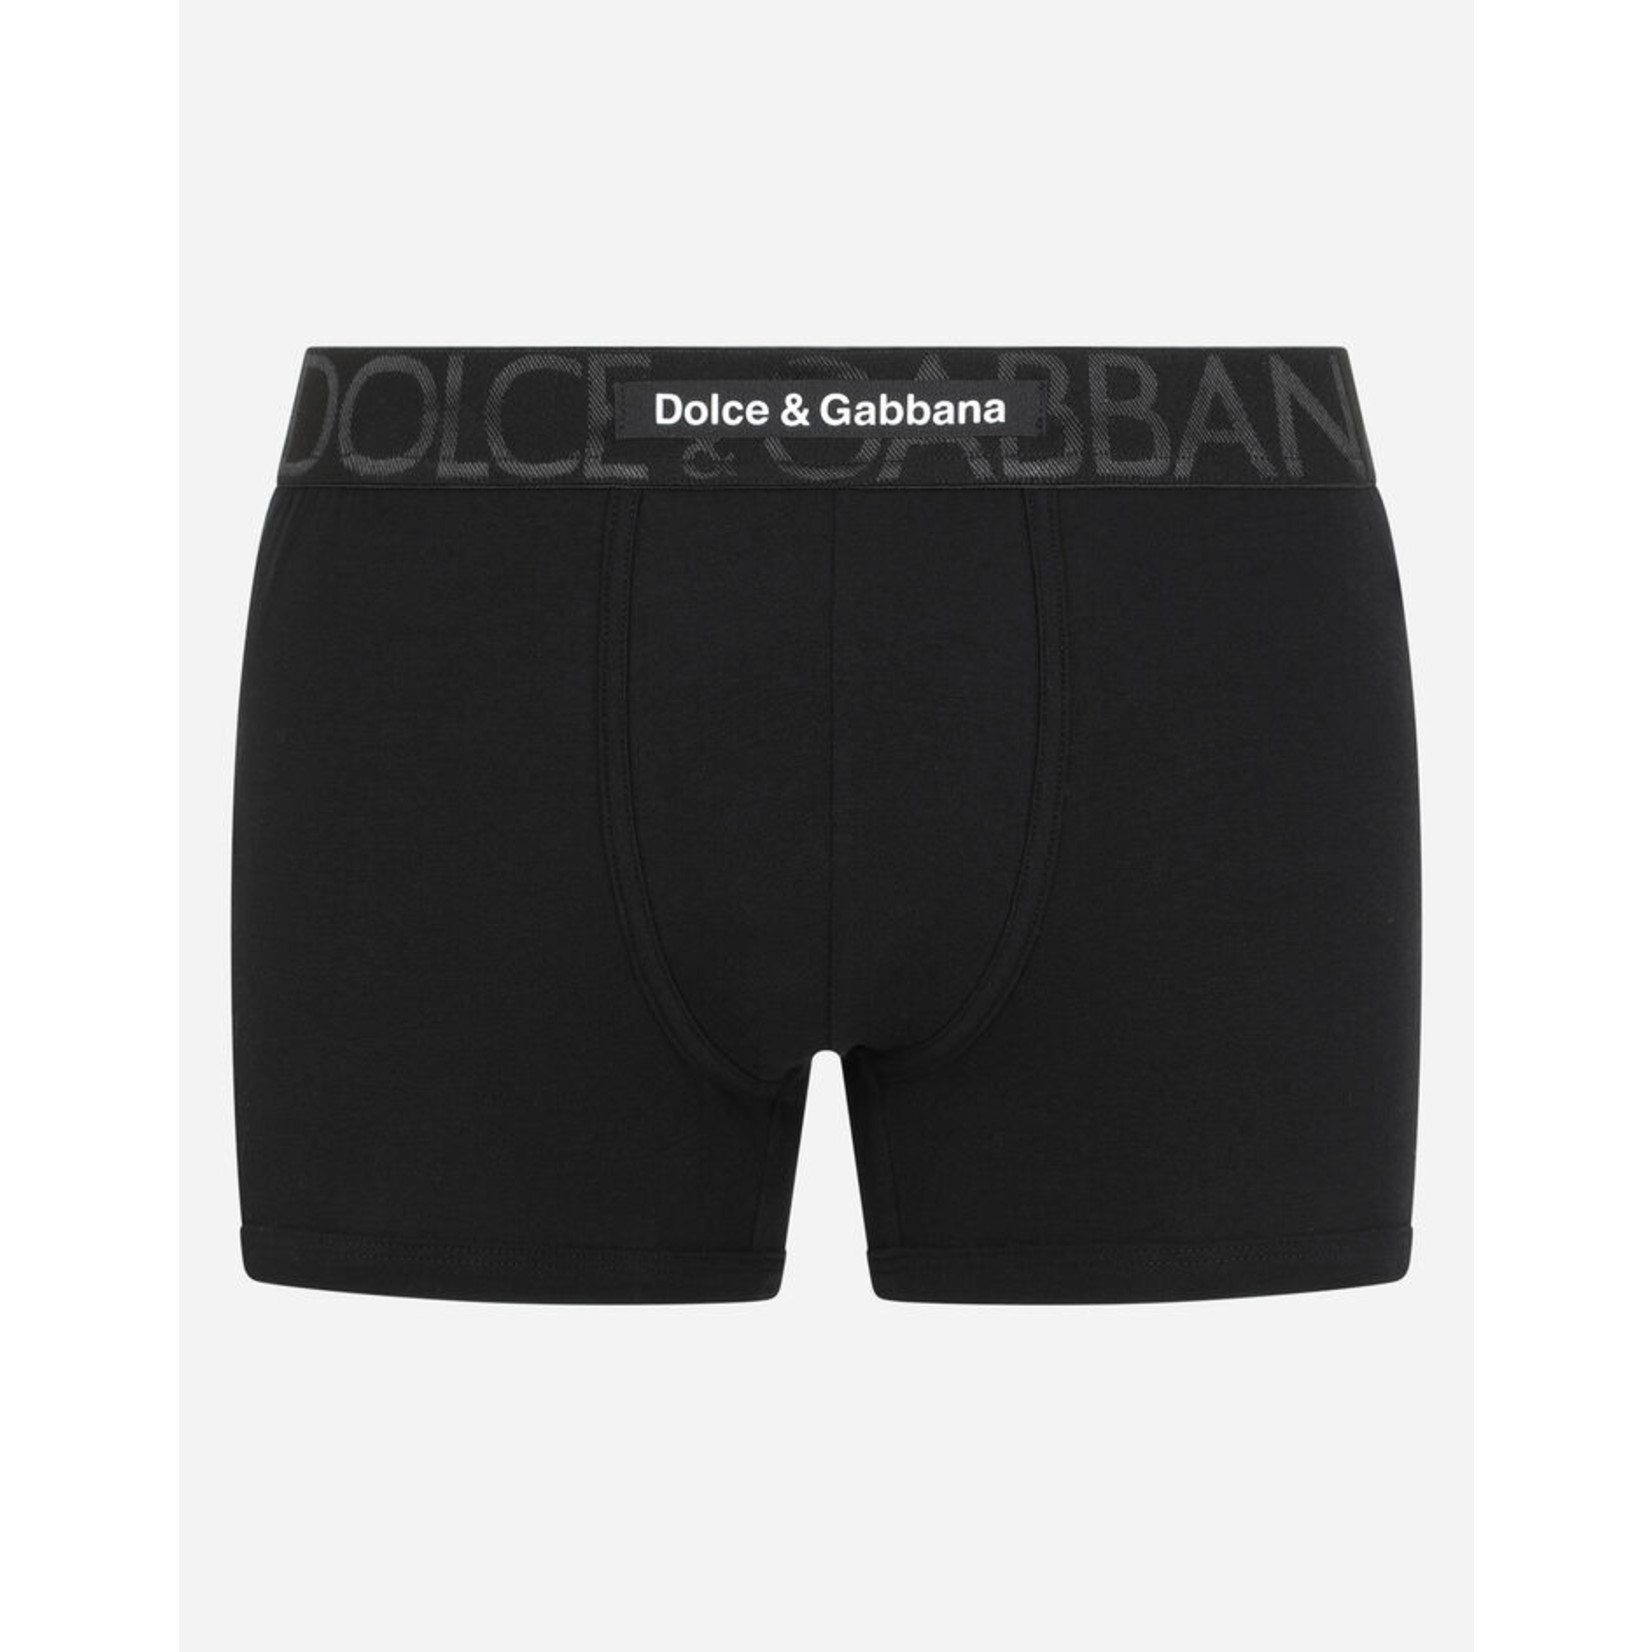 Dolce&Gabbana Intimo Boxer short 42657